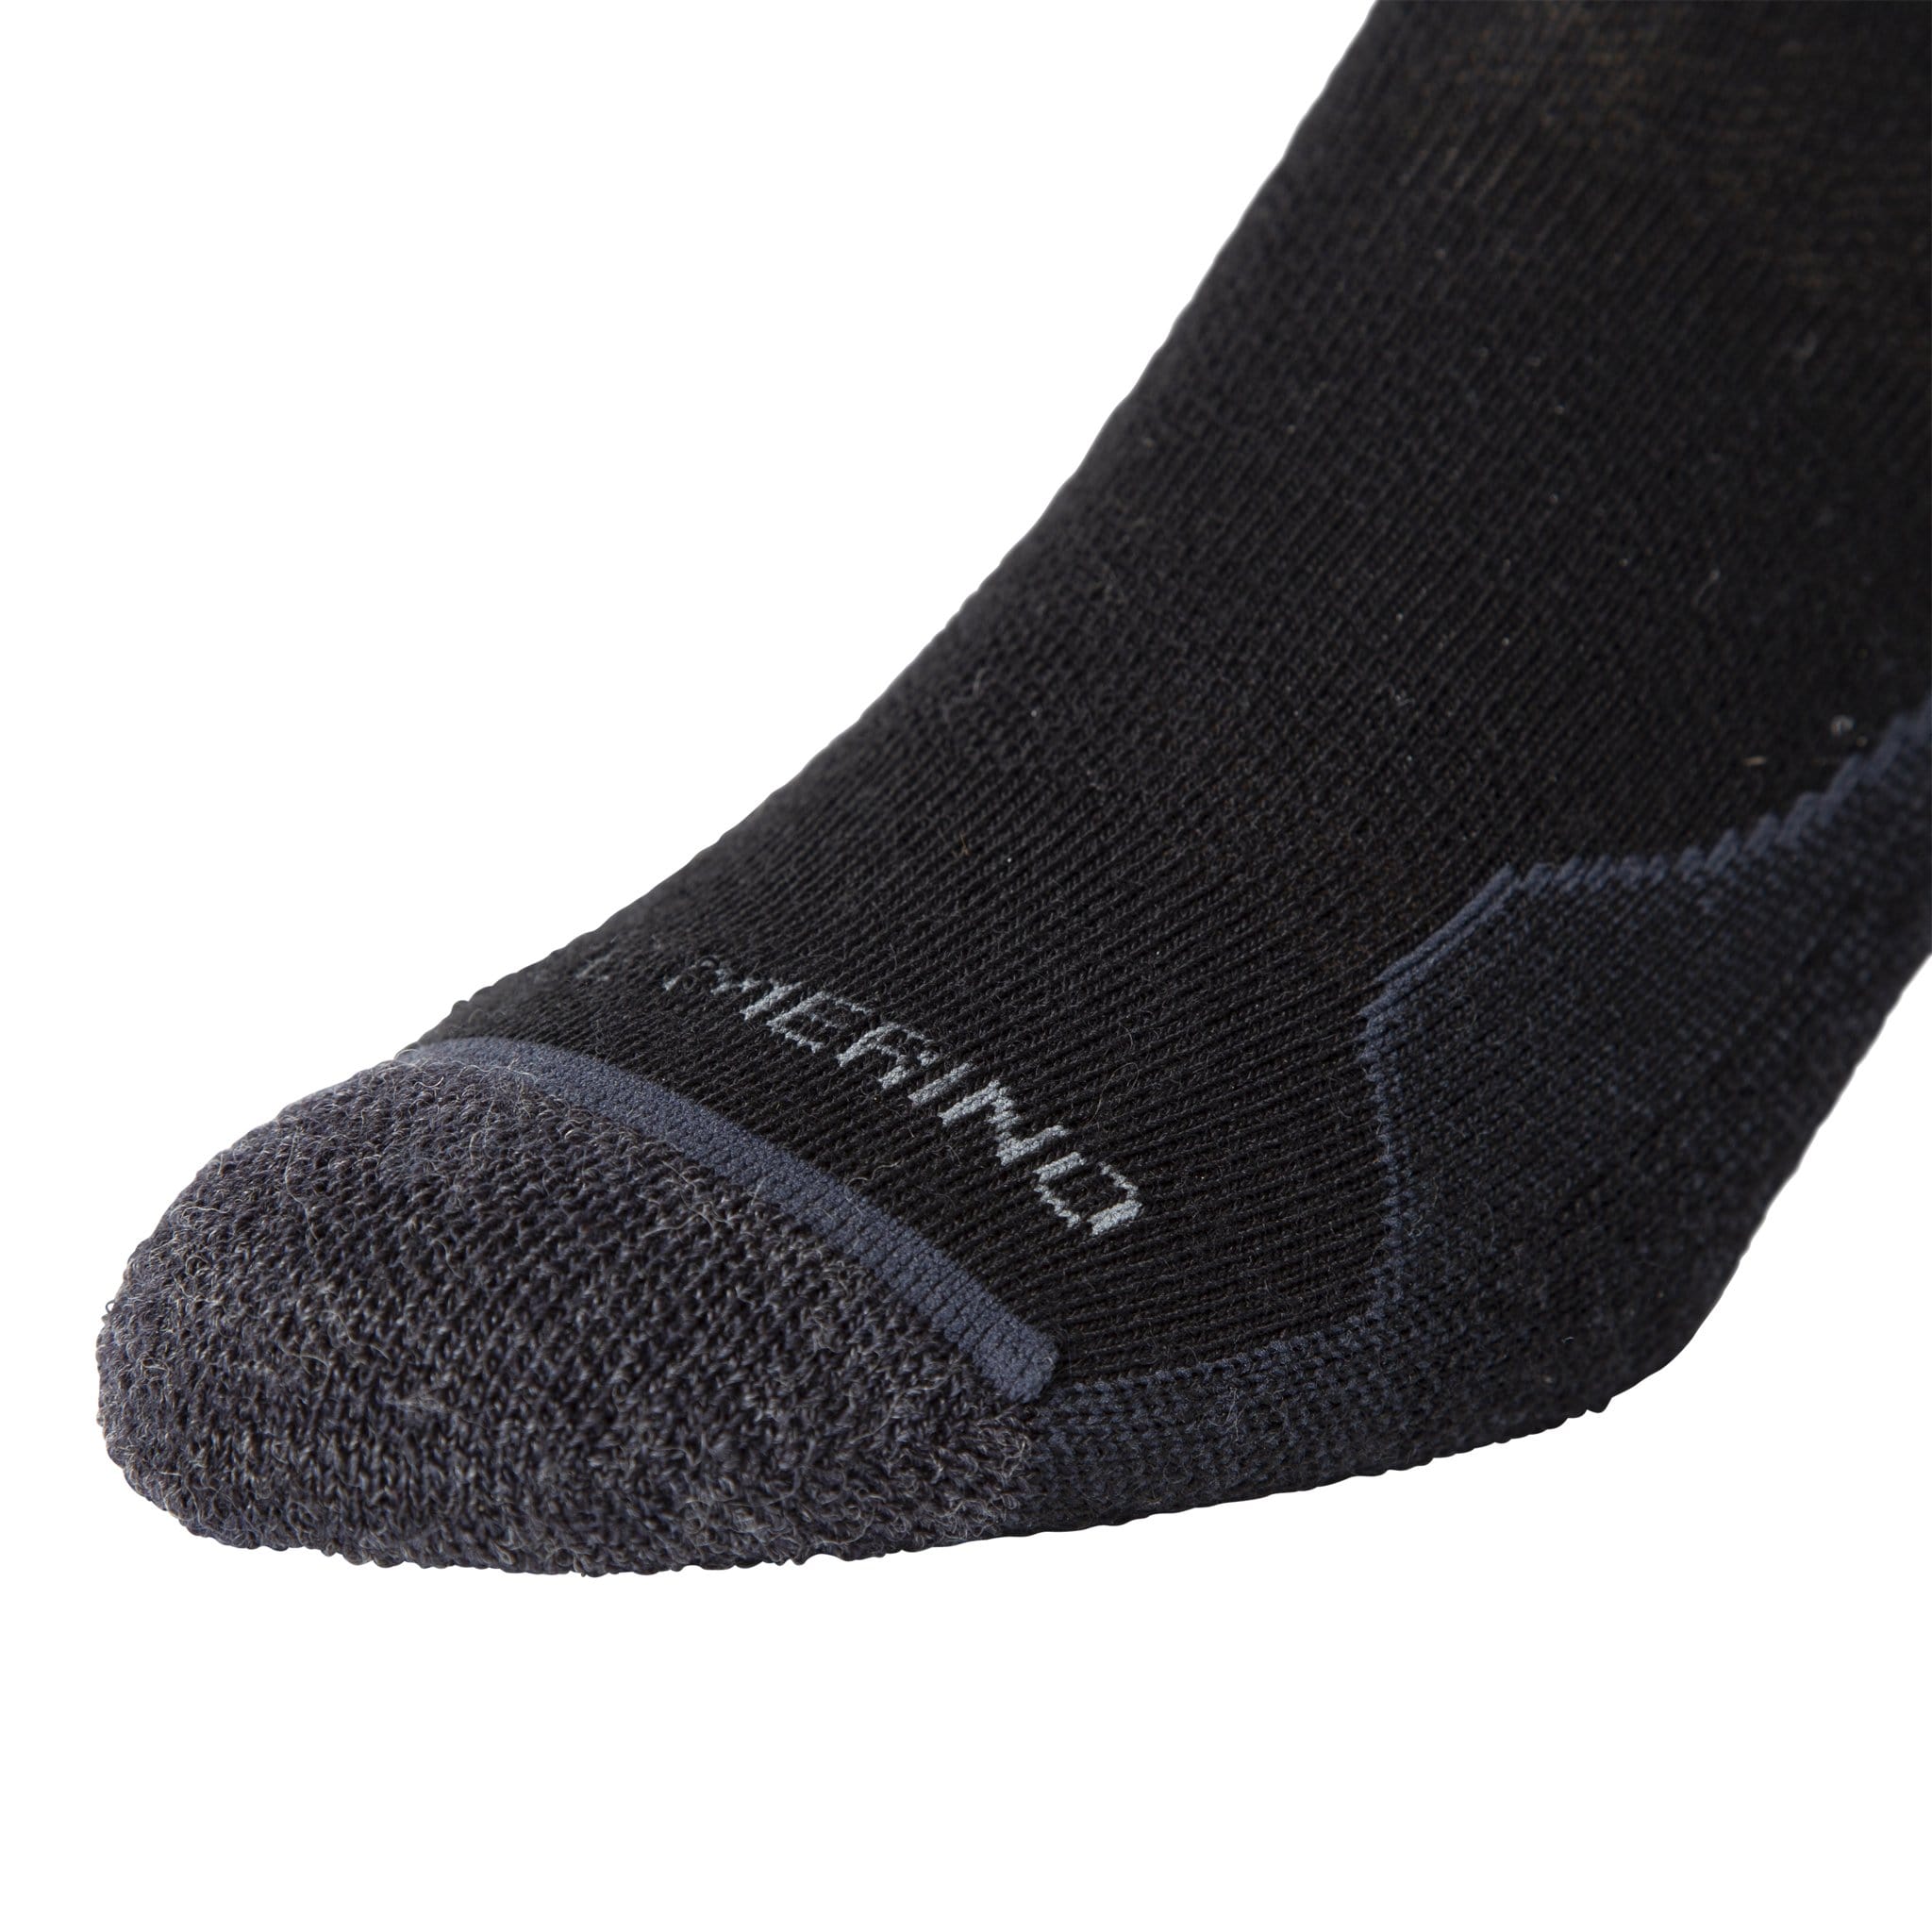 Banked Midweight Merino Ski Socks